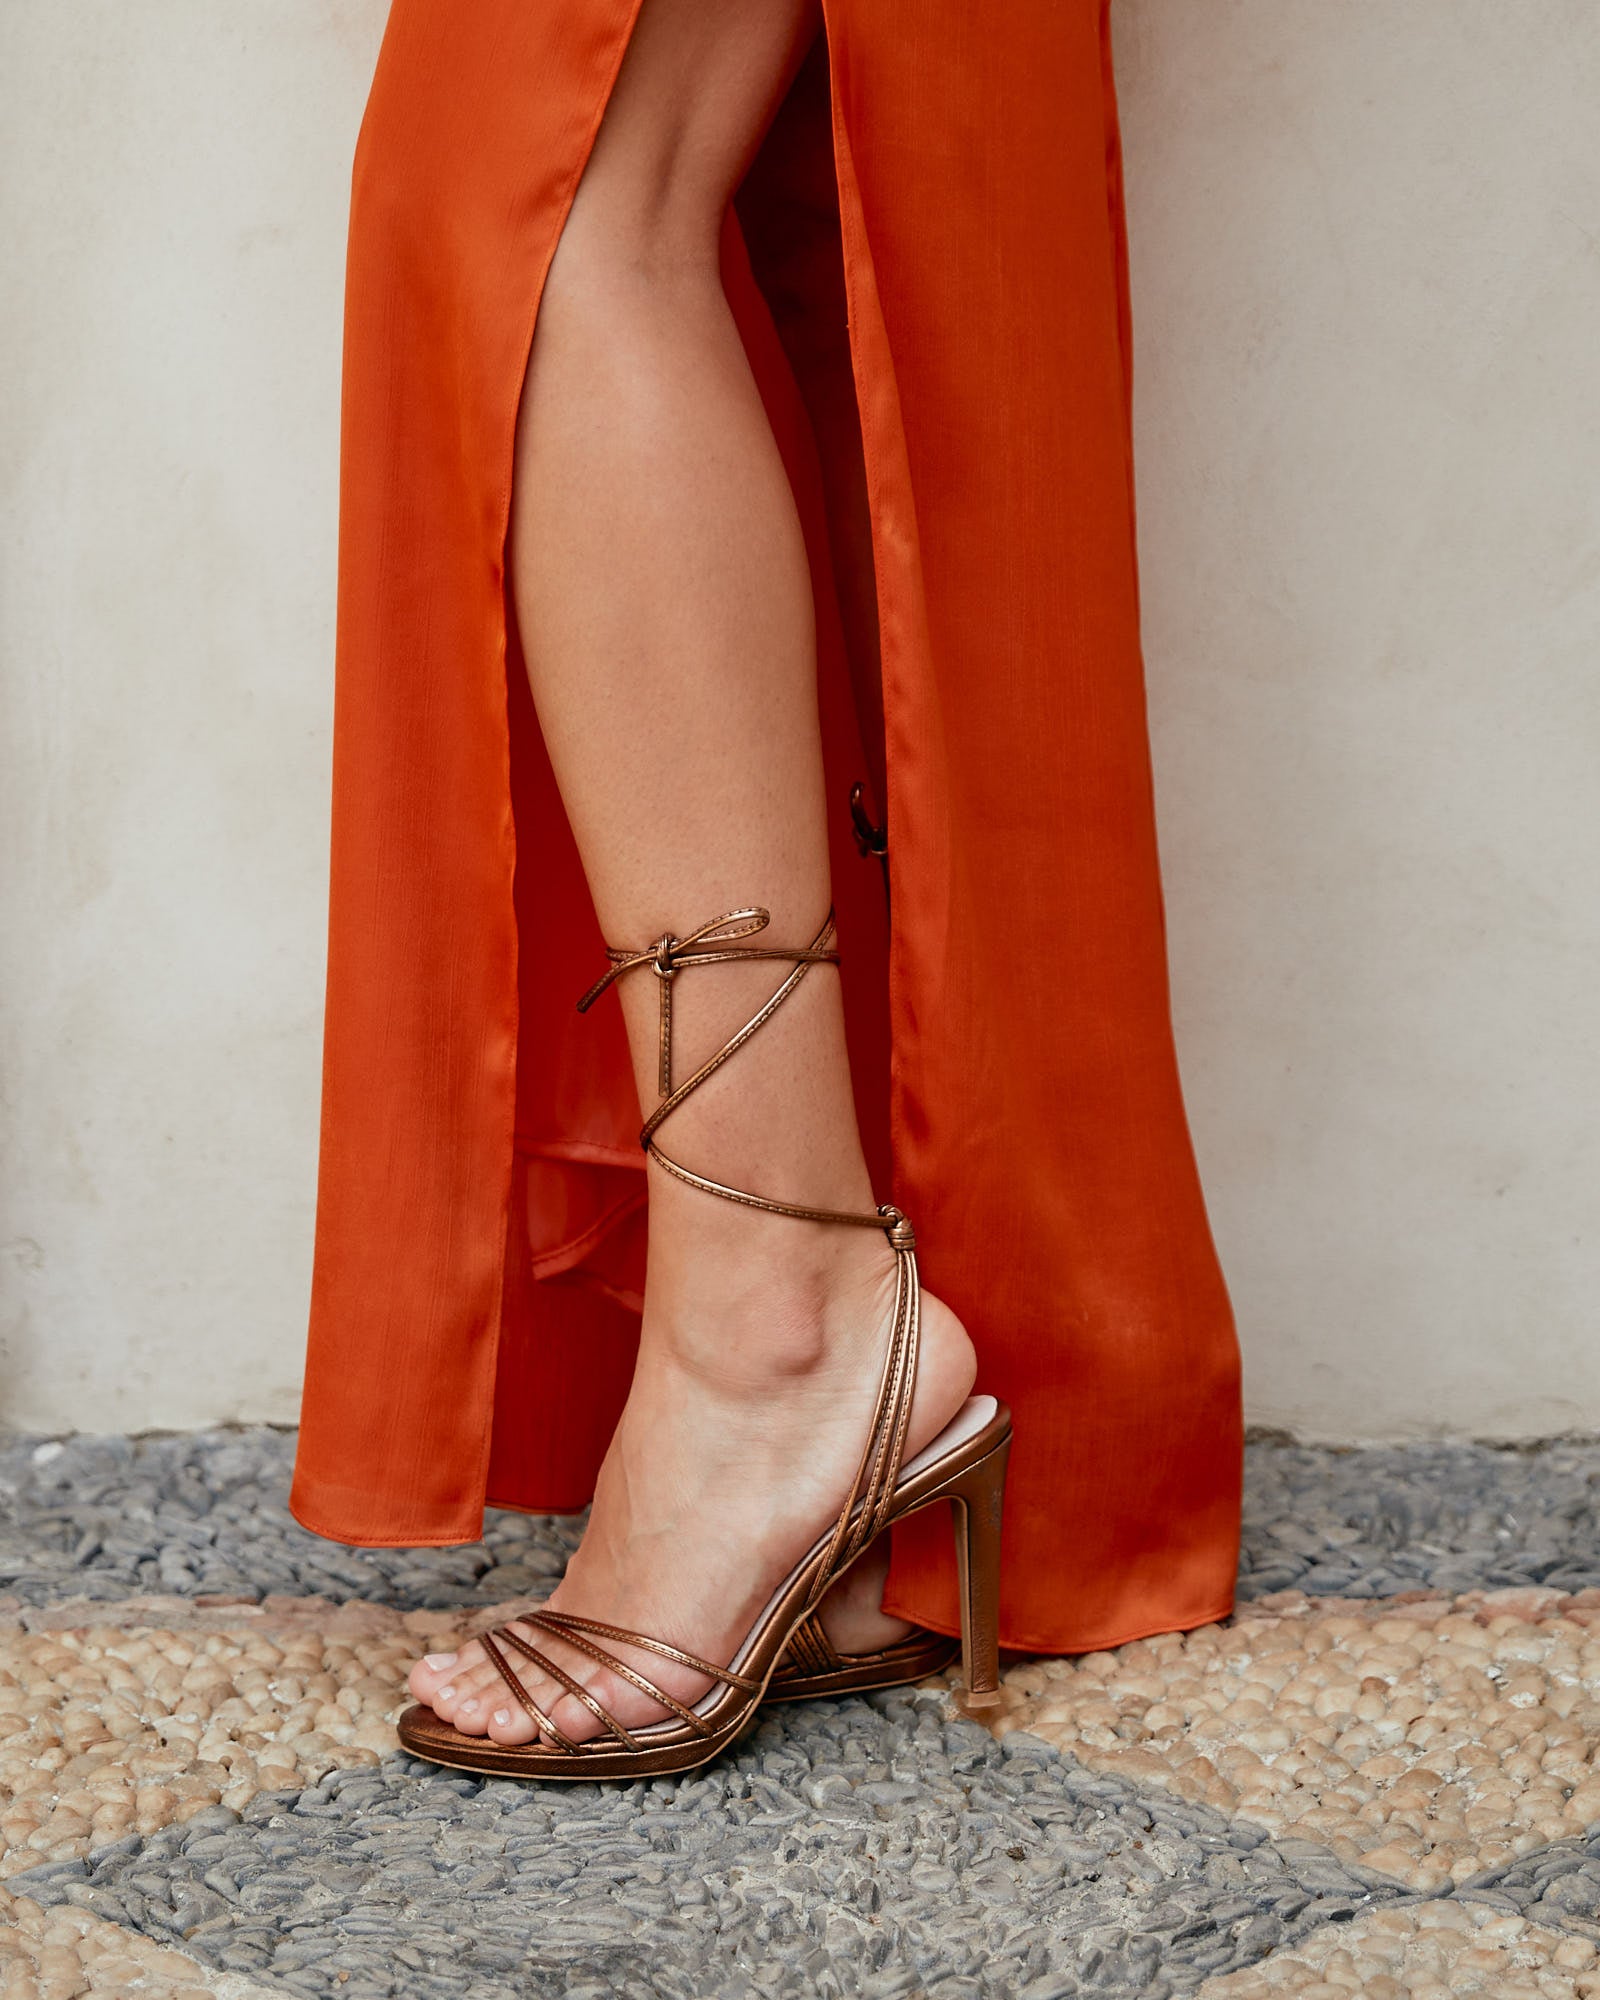 Allegra Copper Sandals